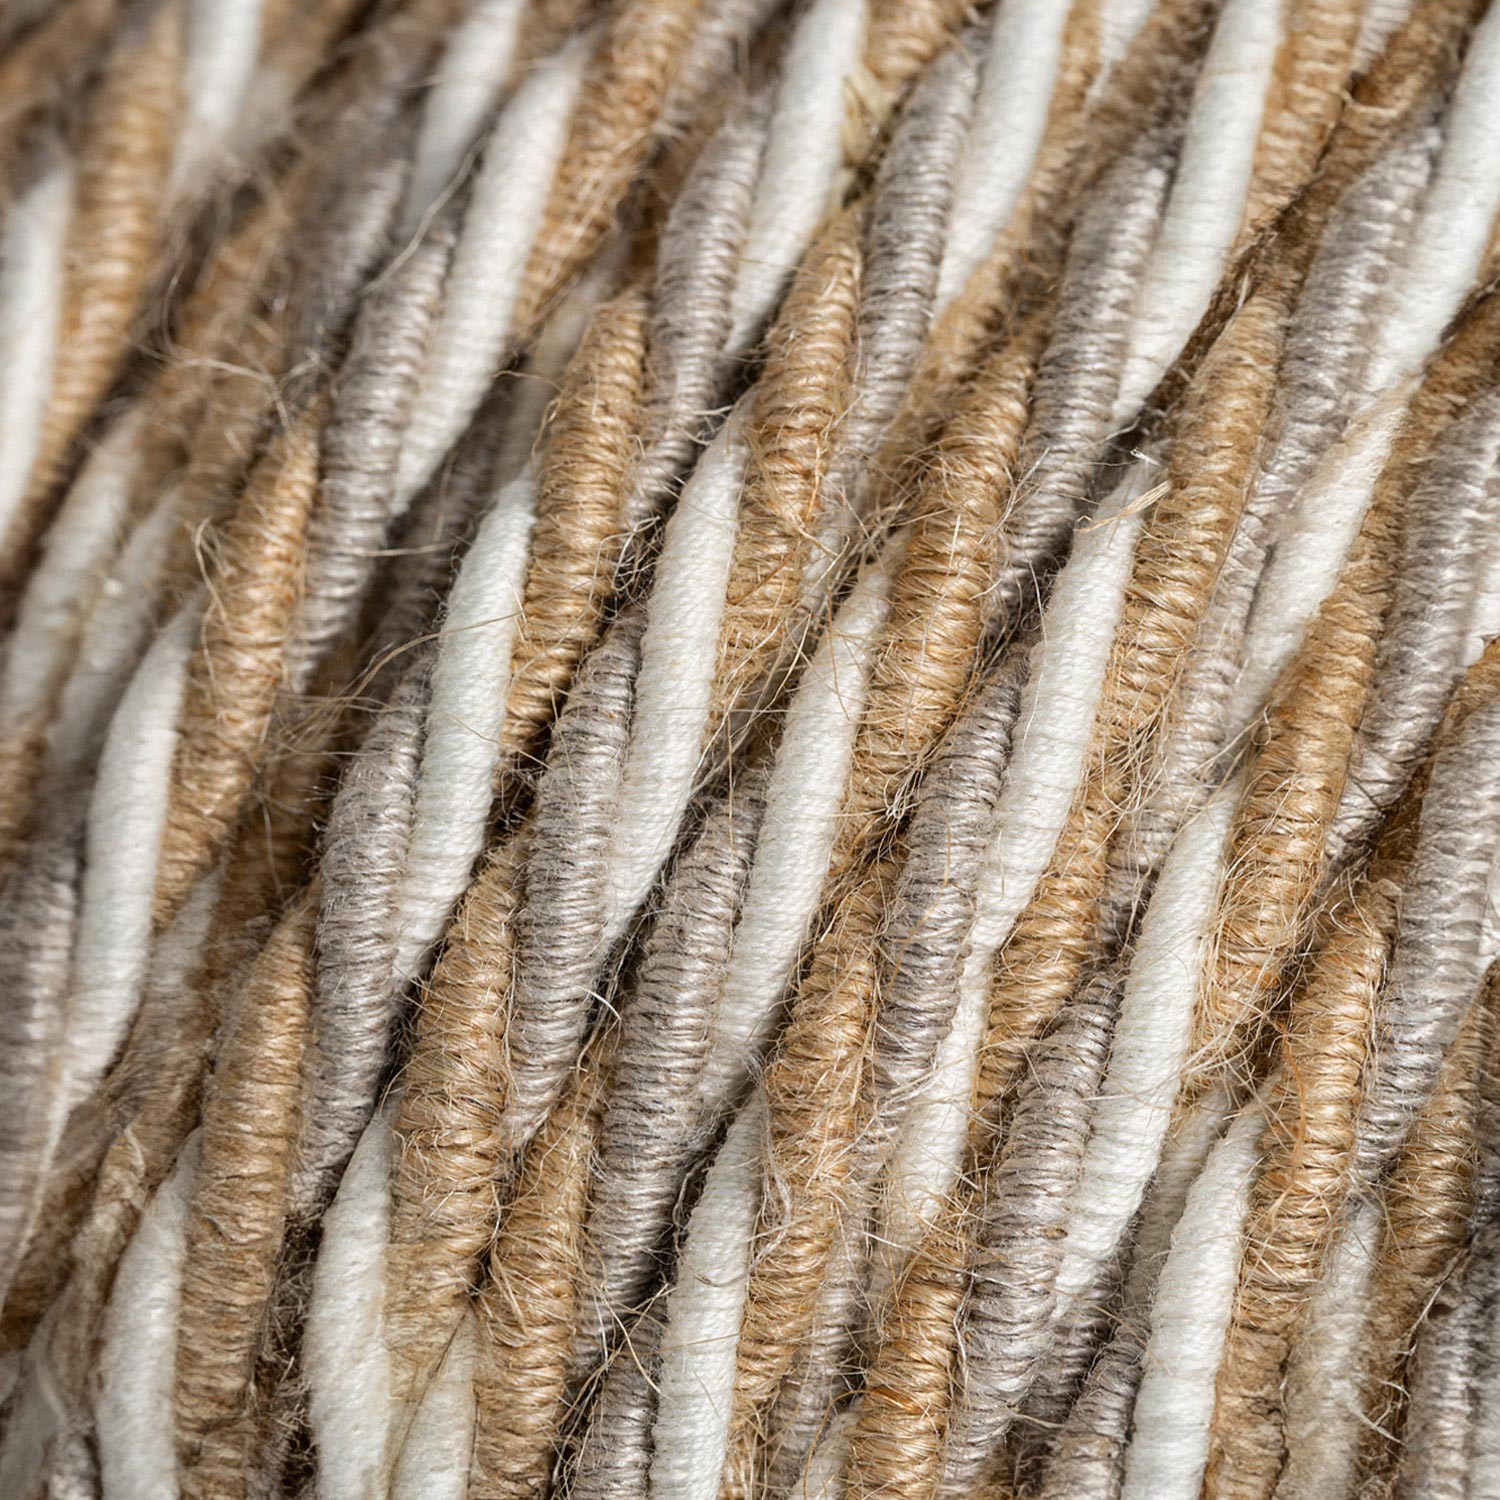 Zamotan tekstilni električni kabel Country TN07 - prekriven jutom, pamukom i prirodnim lanom